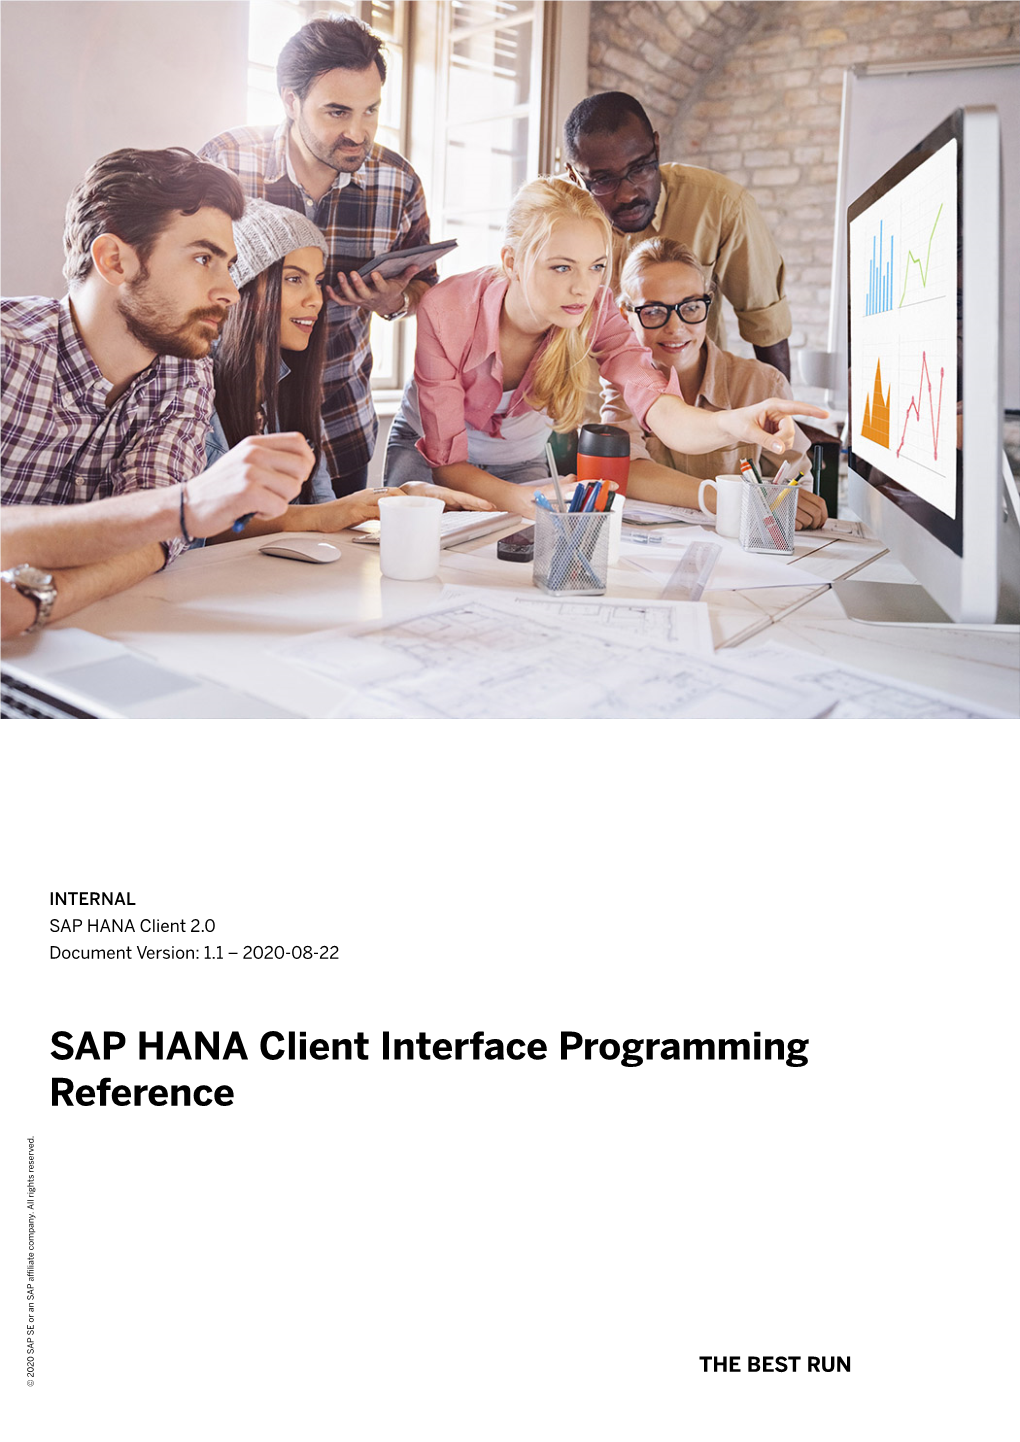 SAP HANA Client Interface Programming Reference Company